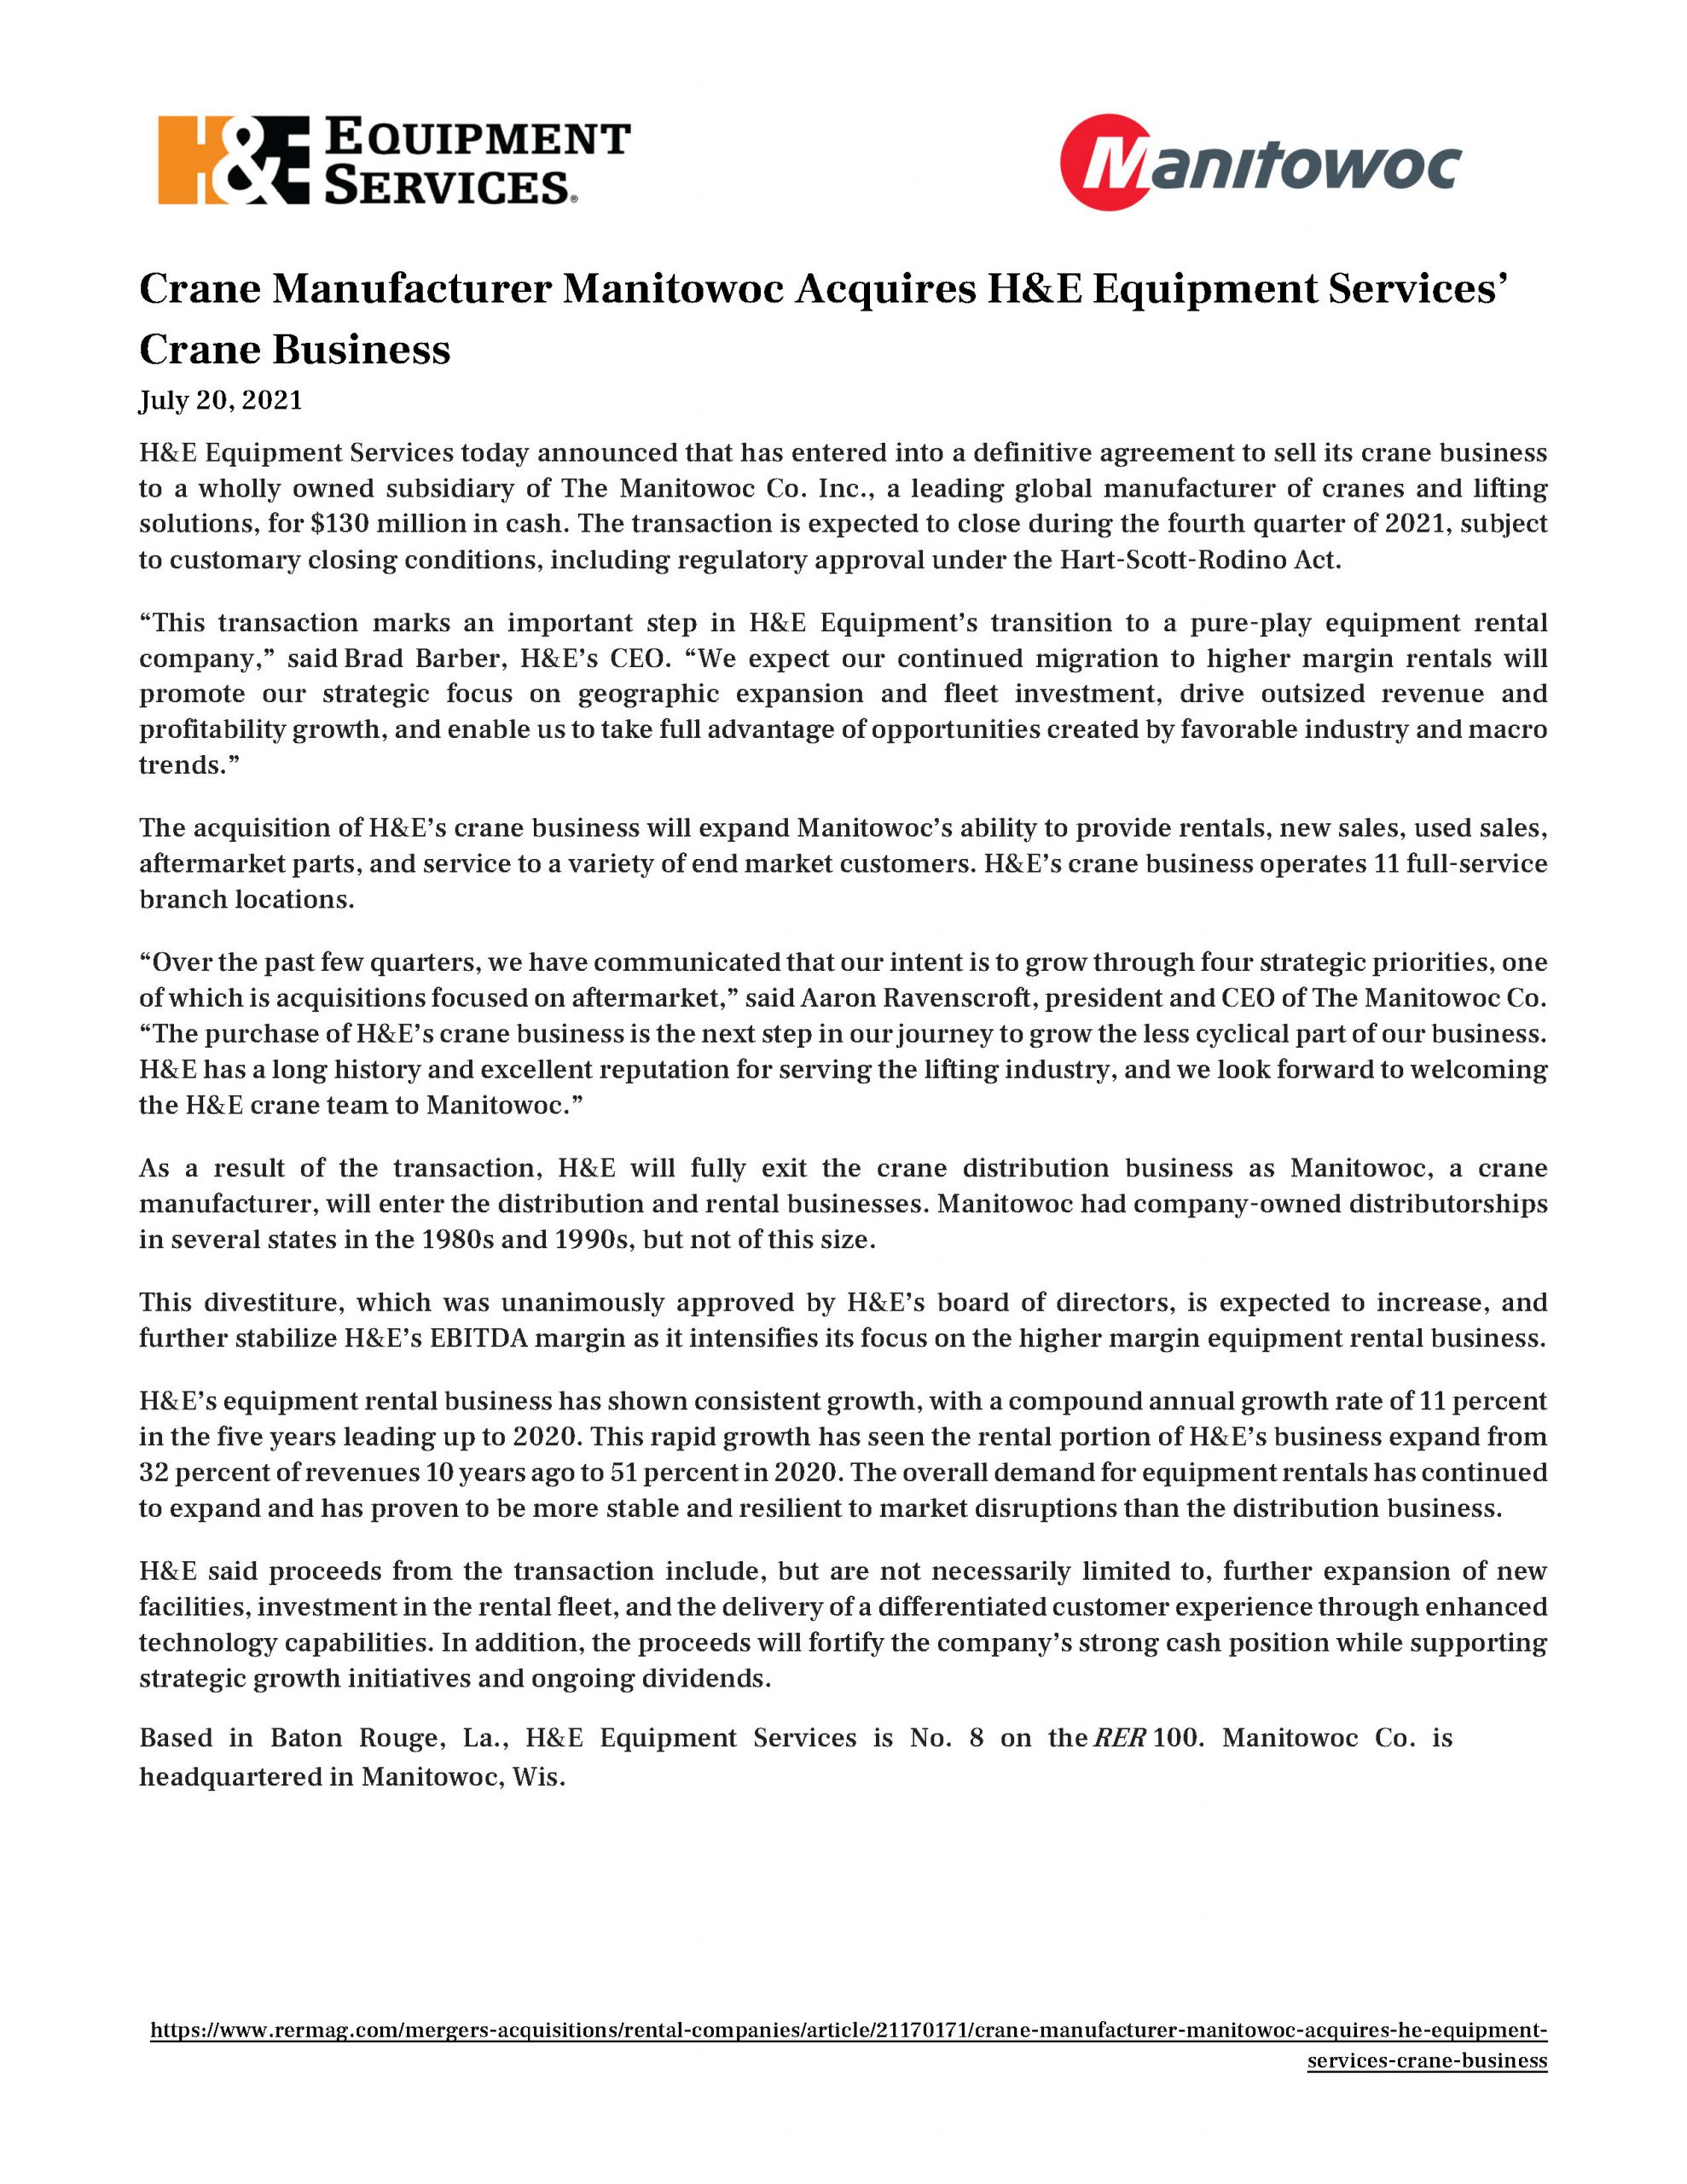 Crane Manufacturer Manitowoc Acquires H&E Equipment Services' Crane Business 7.20.2021